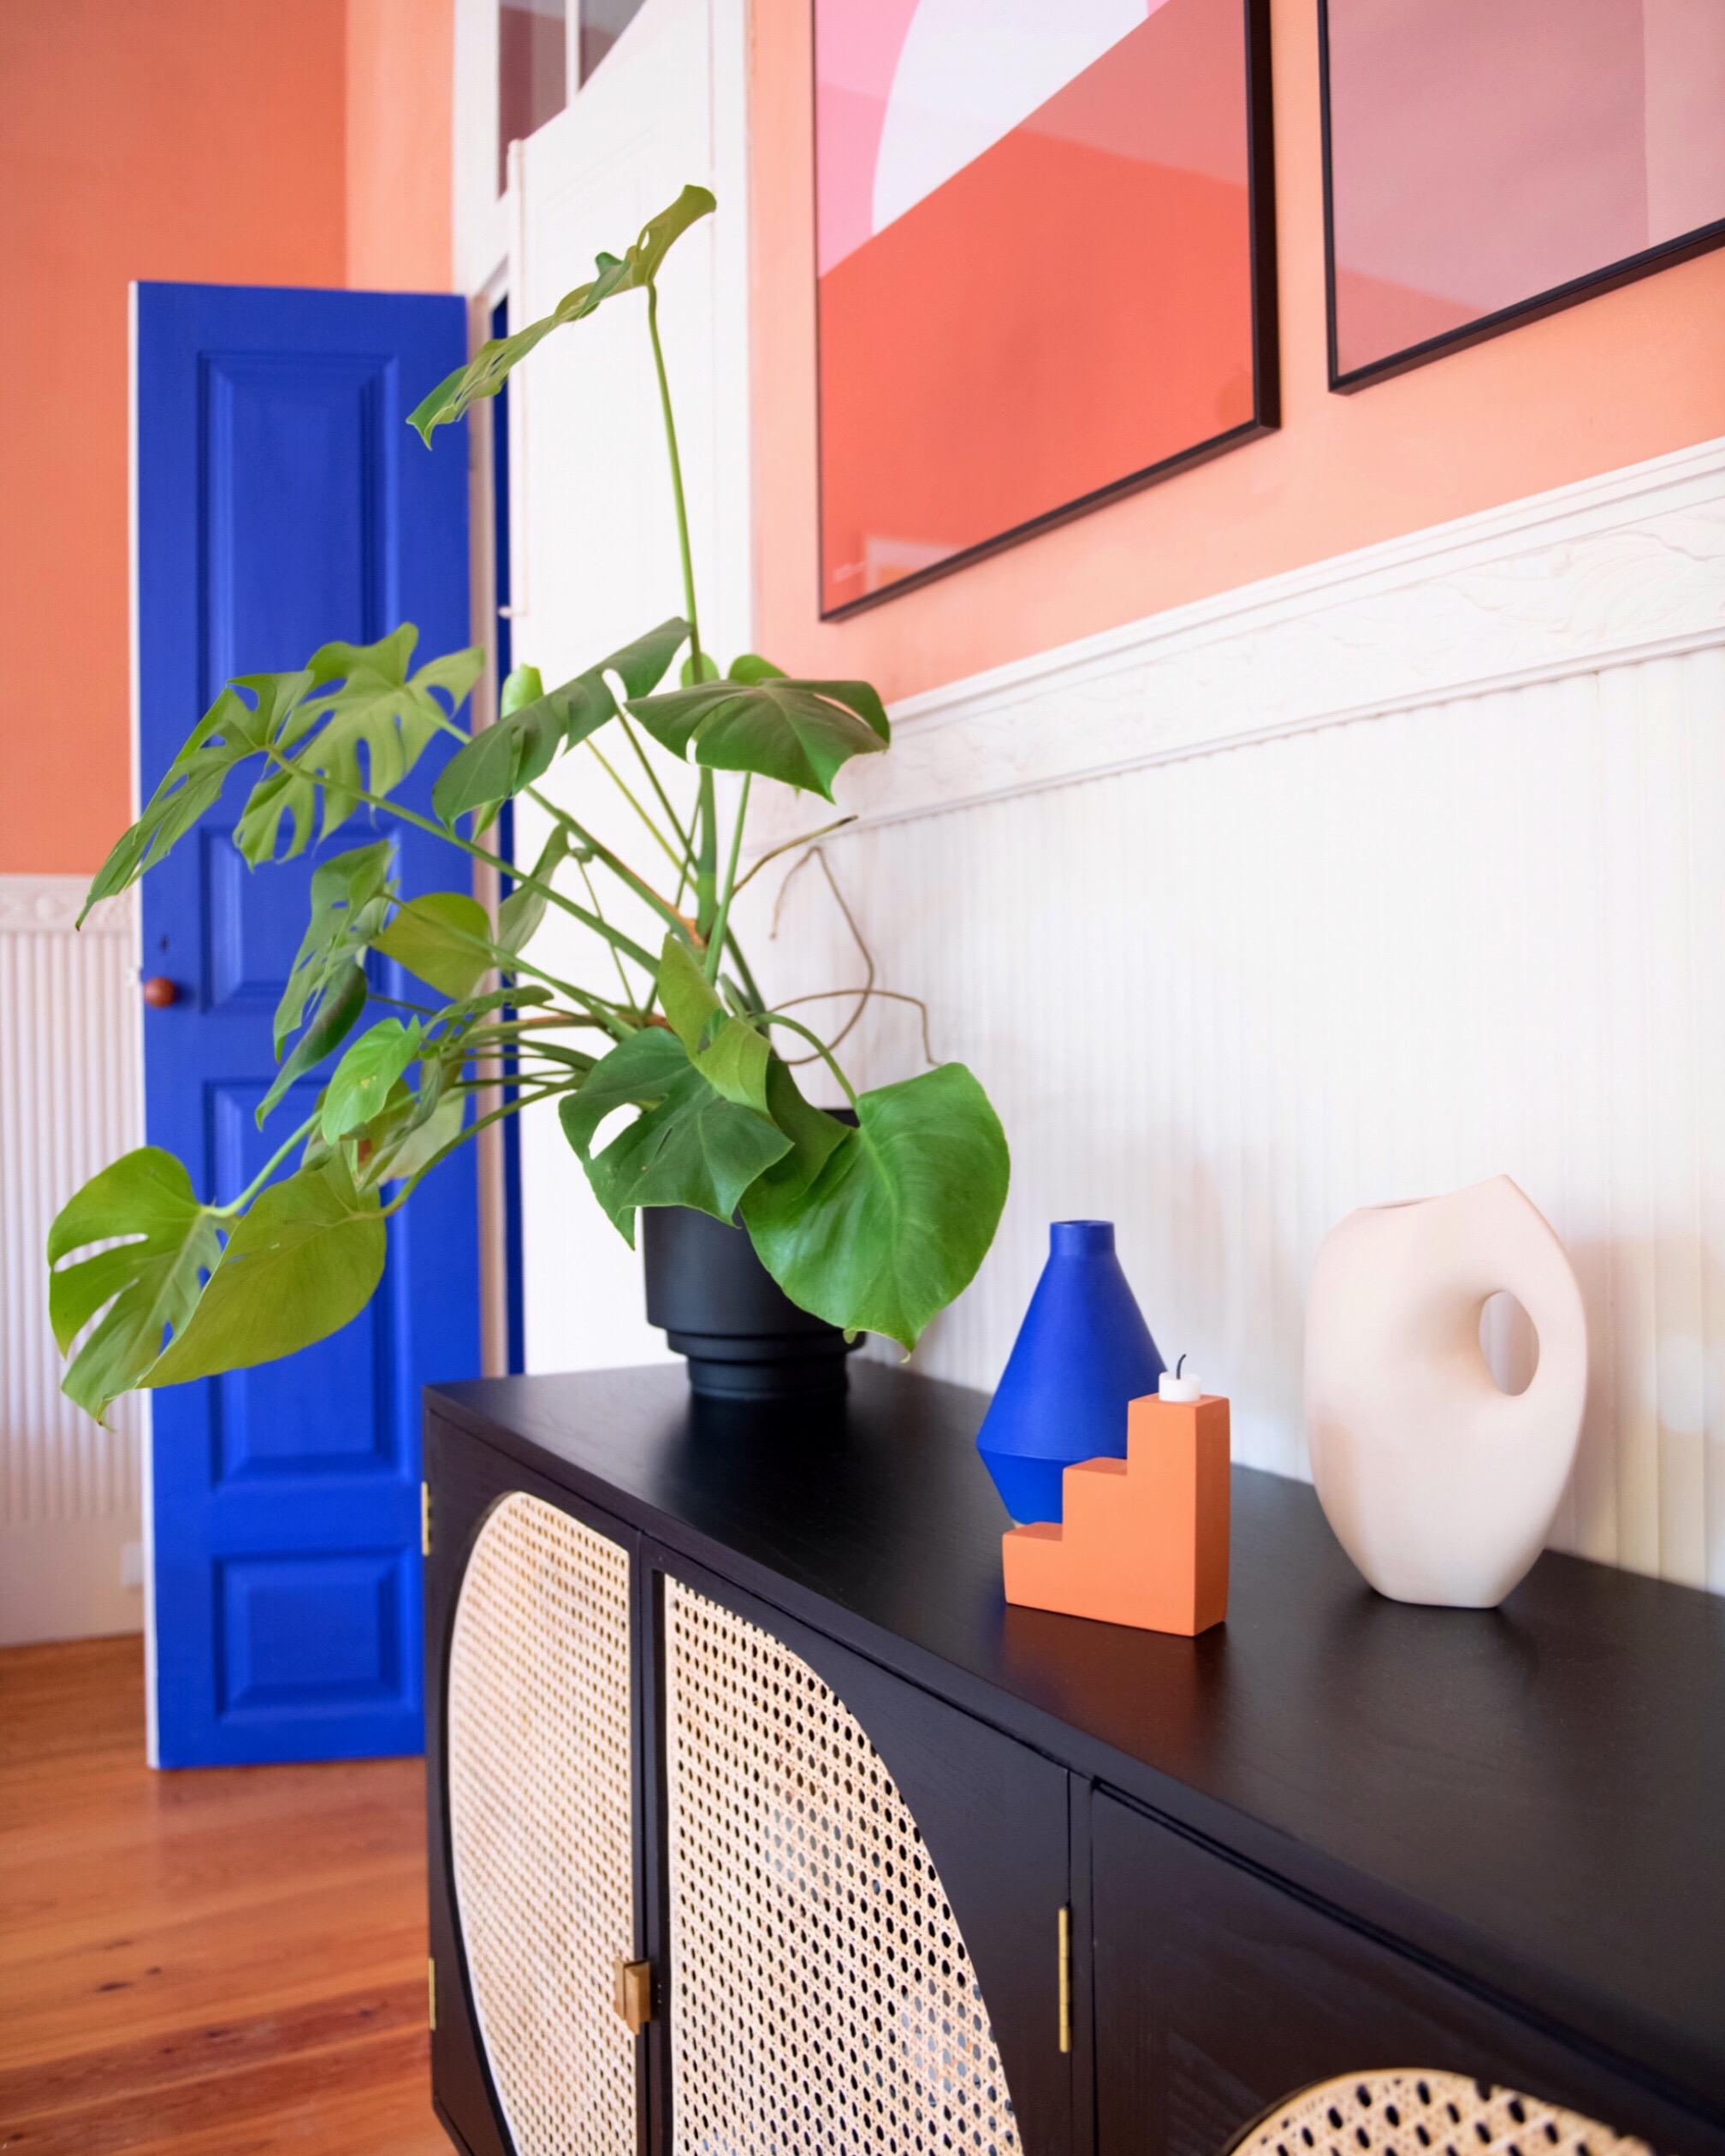 Ich liebe unsere Tür in Ultramarinblau 💙
#livingroom #yveskleinblue #eclectic